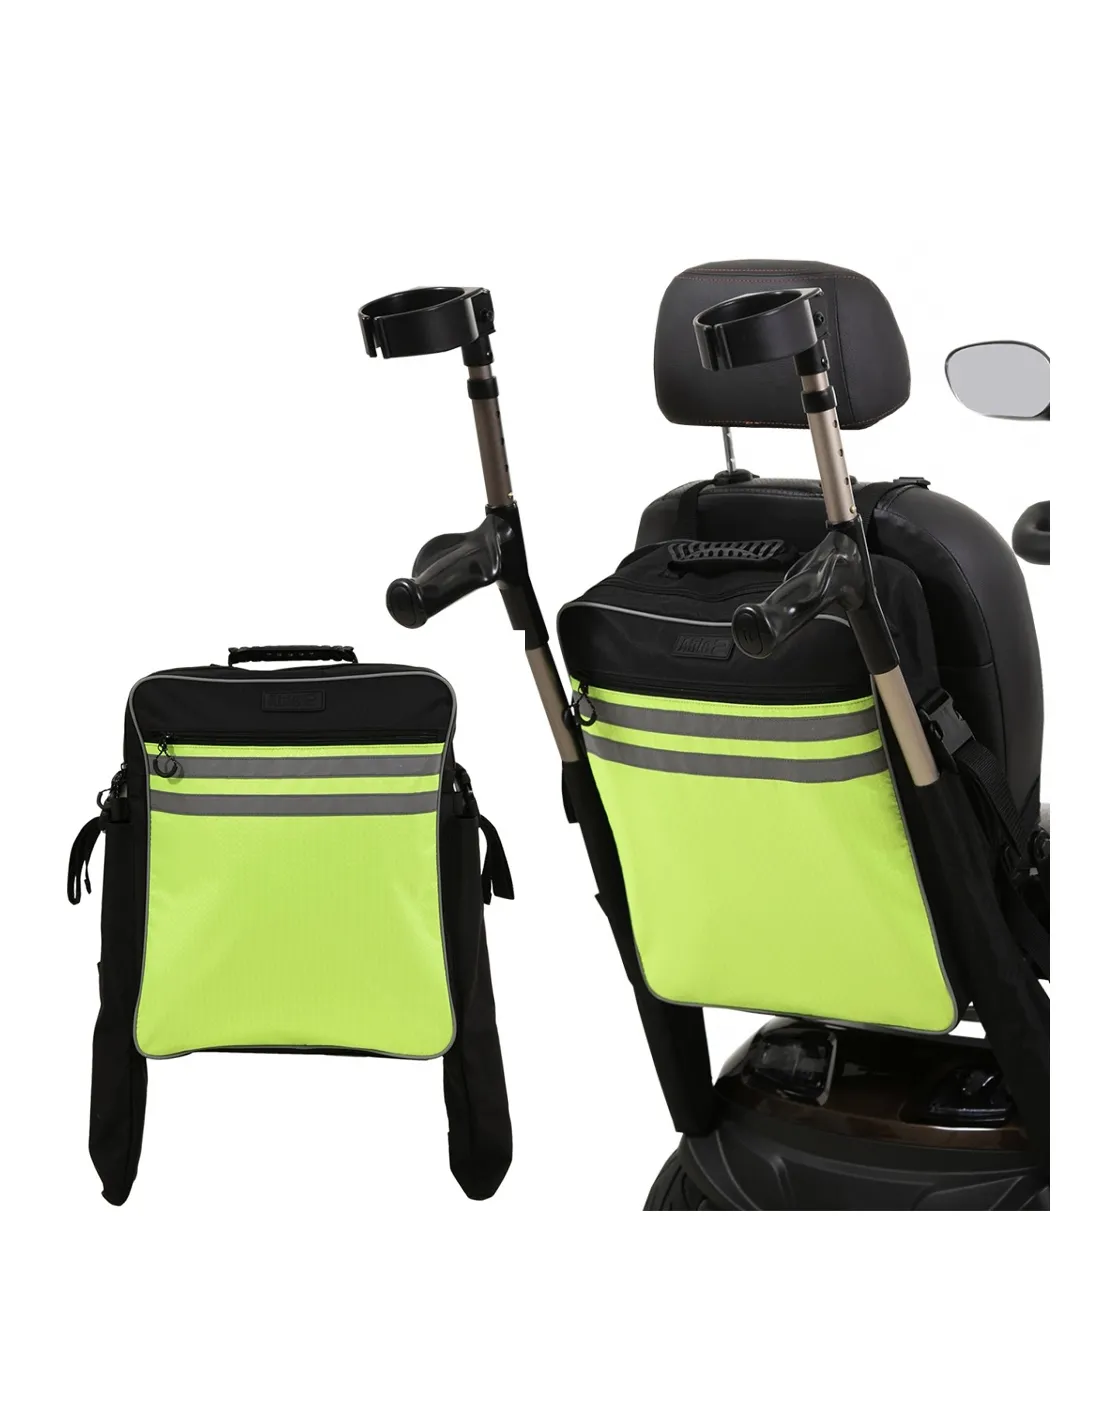 Bolsa para silla de ruedas o scooter - Blog Ortopedia Silvio